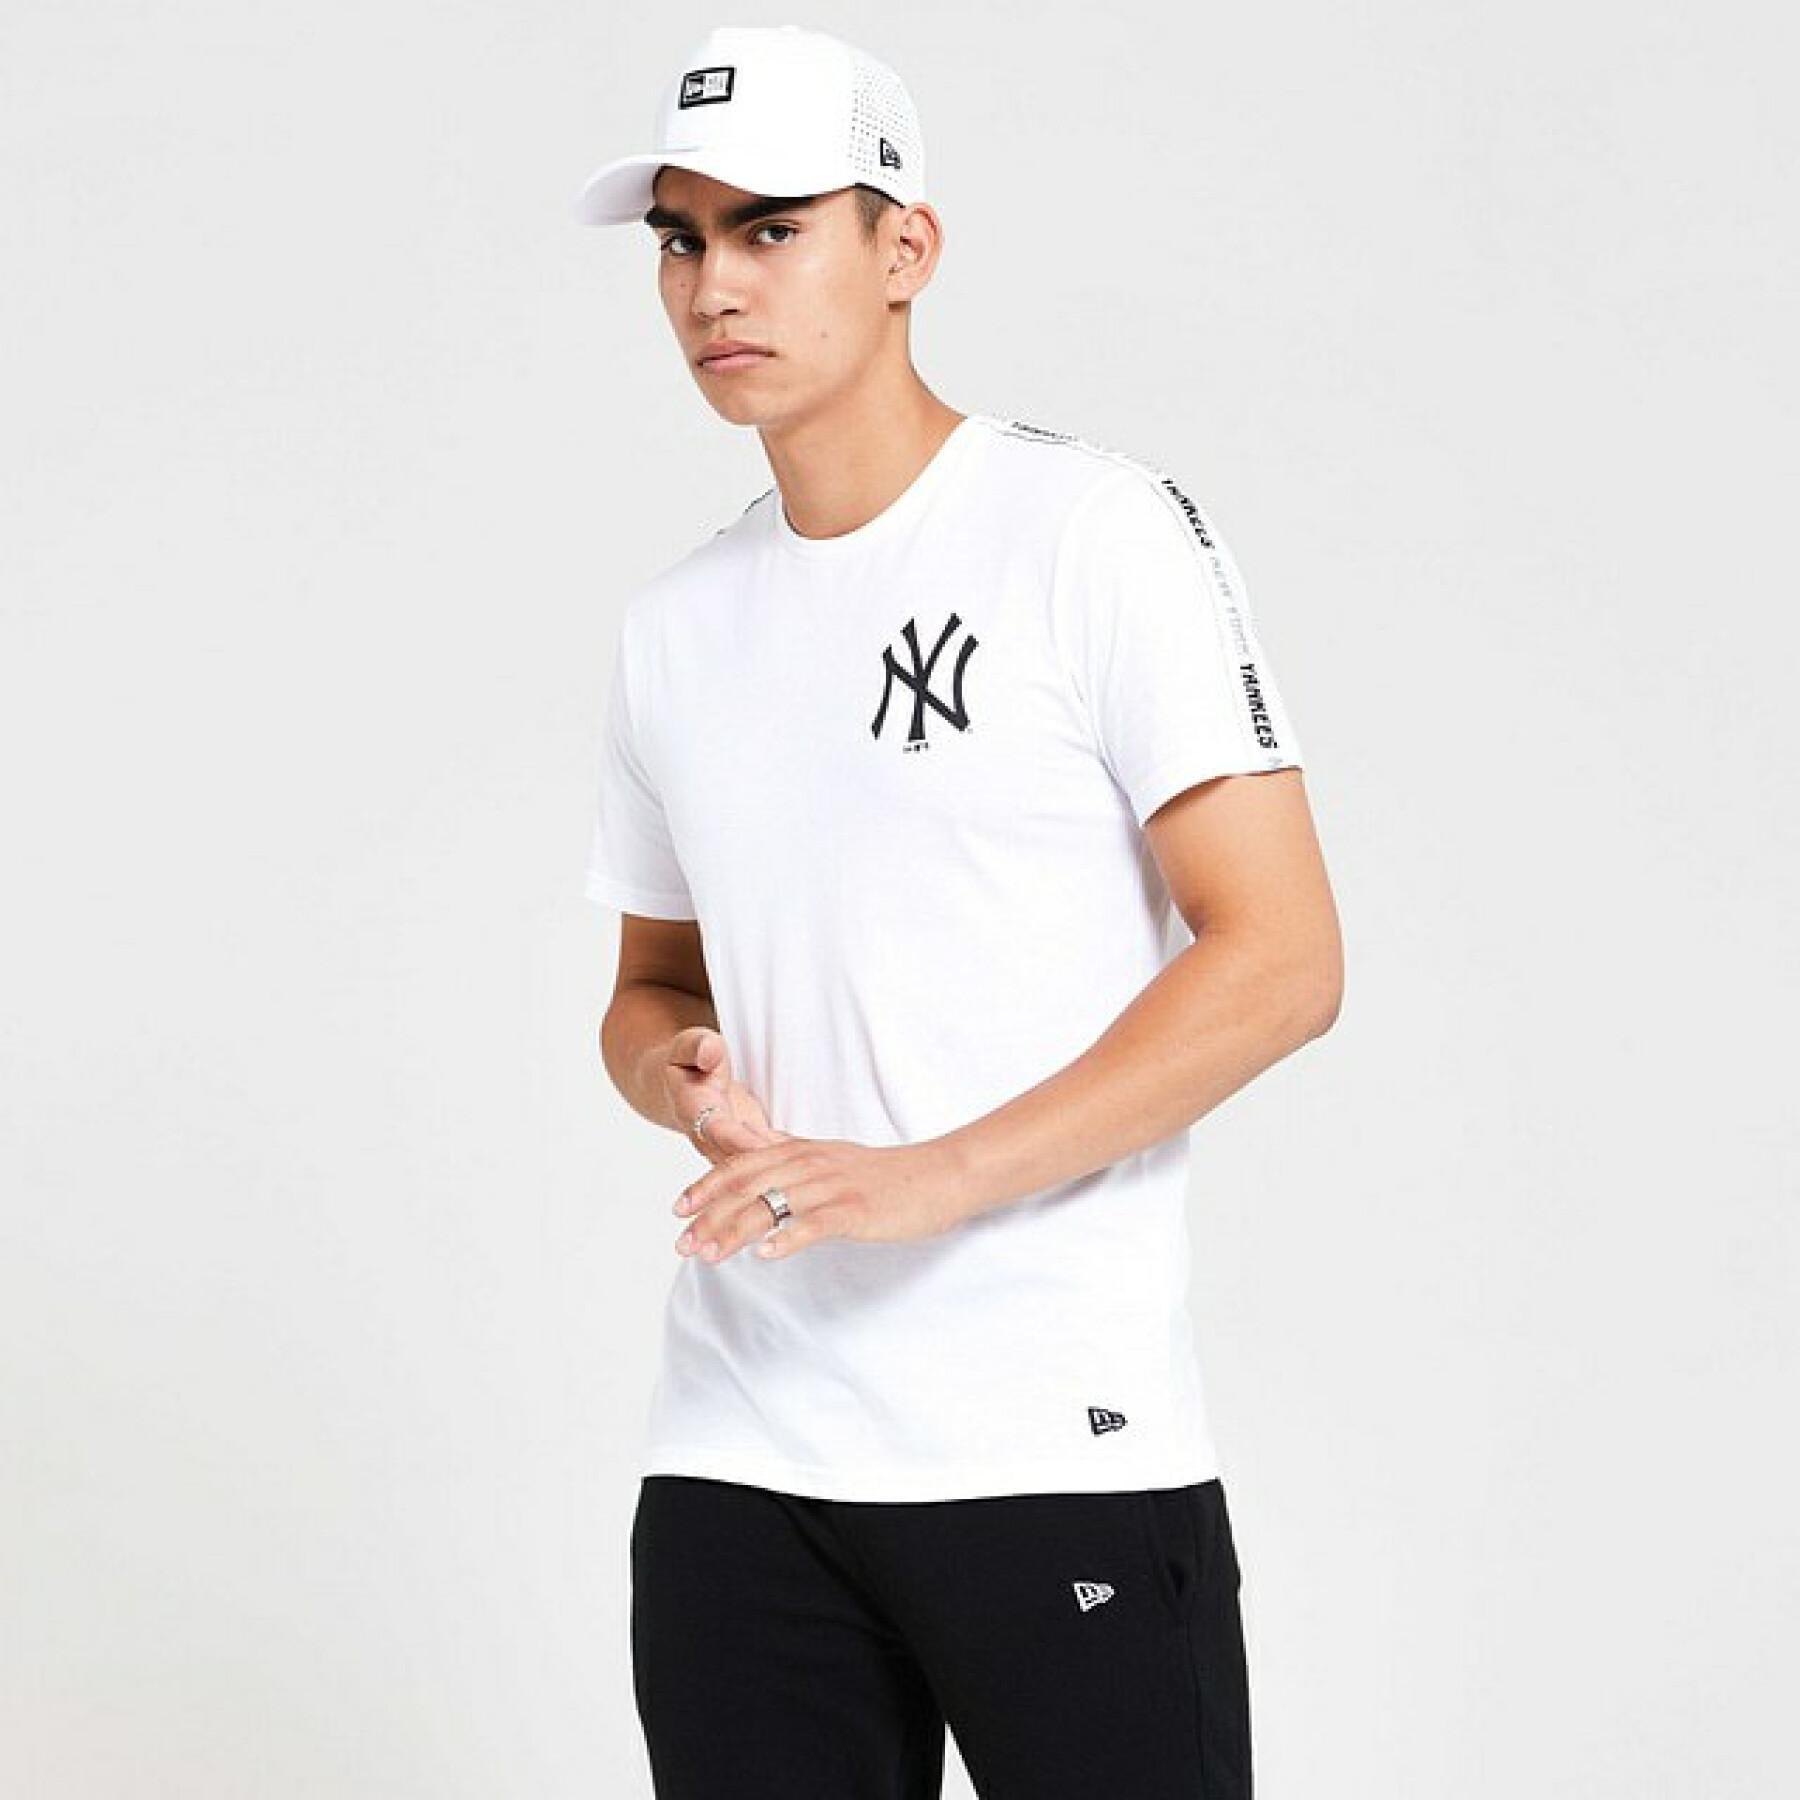 T-shirt New York Yankees